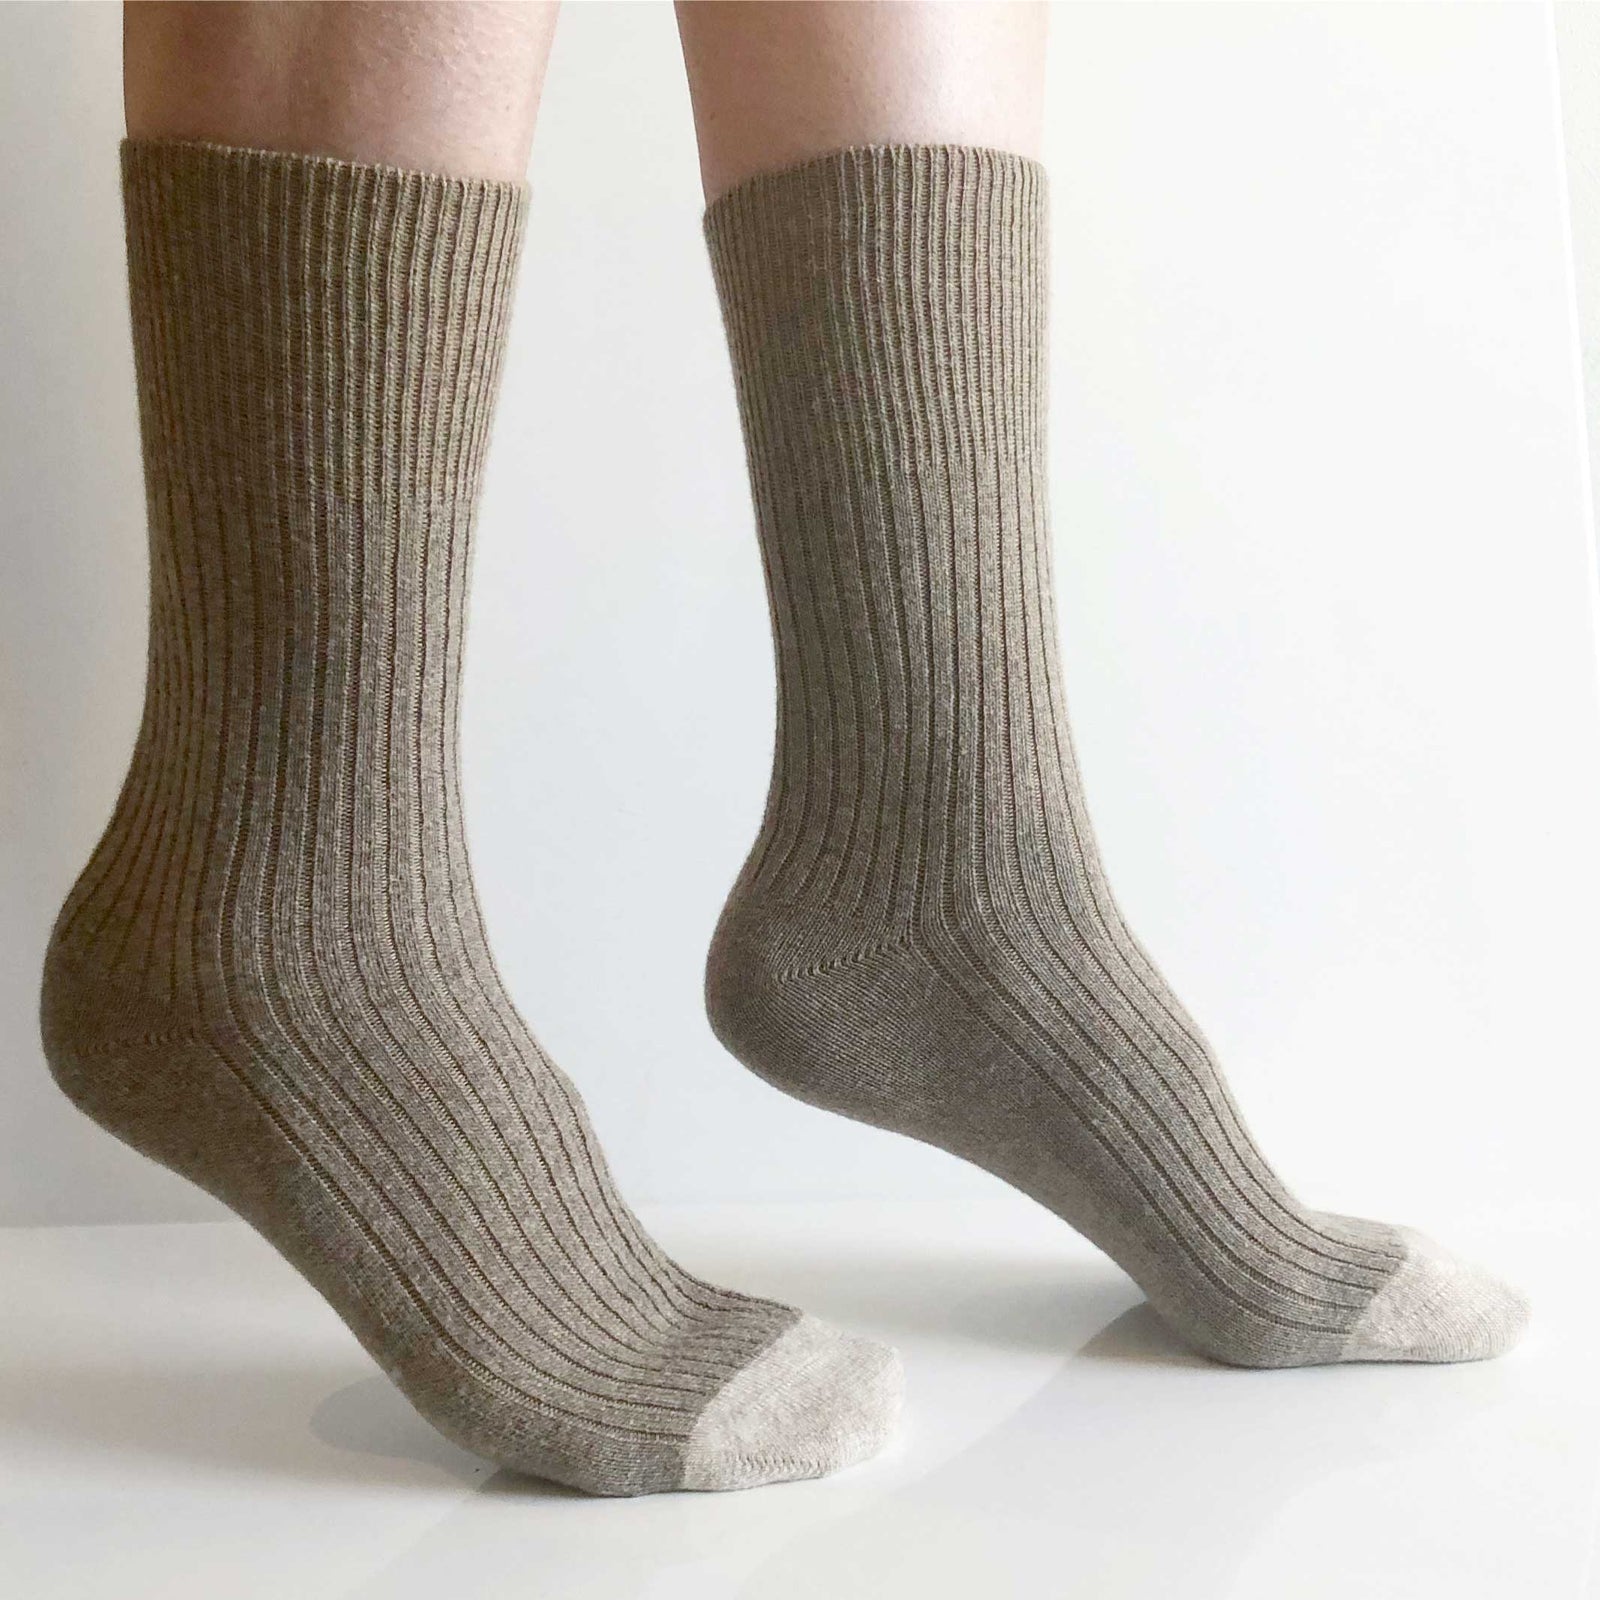 SOCKS: Women's wool socks with cashmere